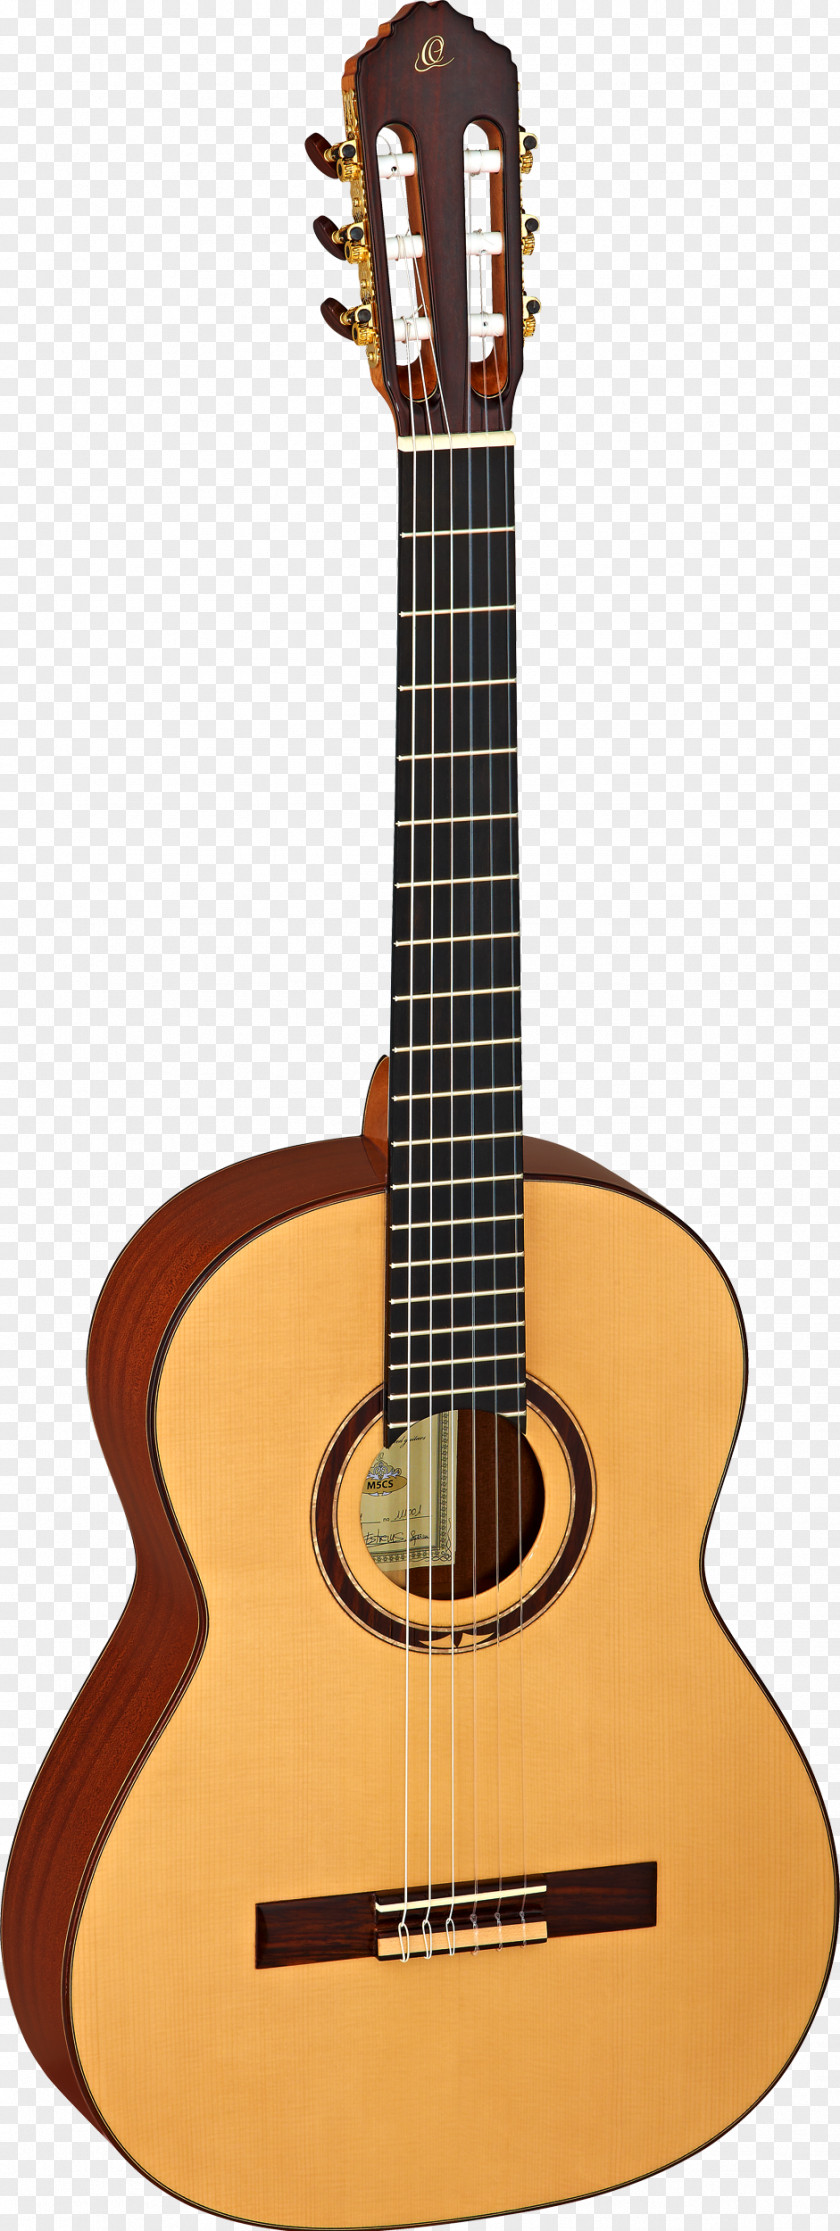 Amancio Ortega NAMM Show C. F. Martin & Company Steel-string Acoustic Guitar D-28 PNG